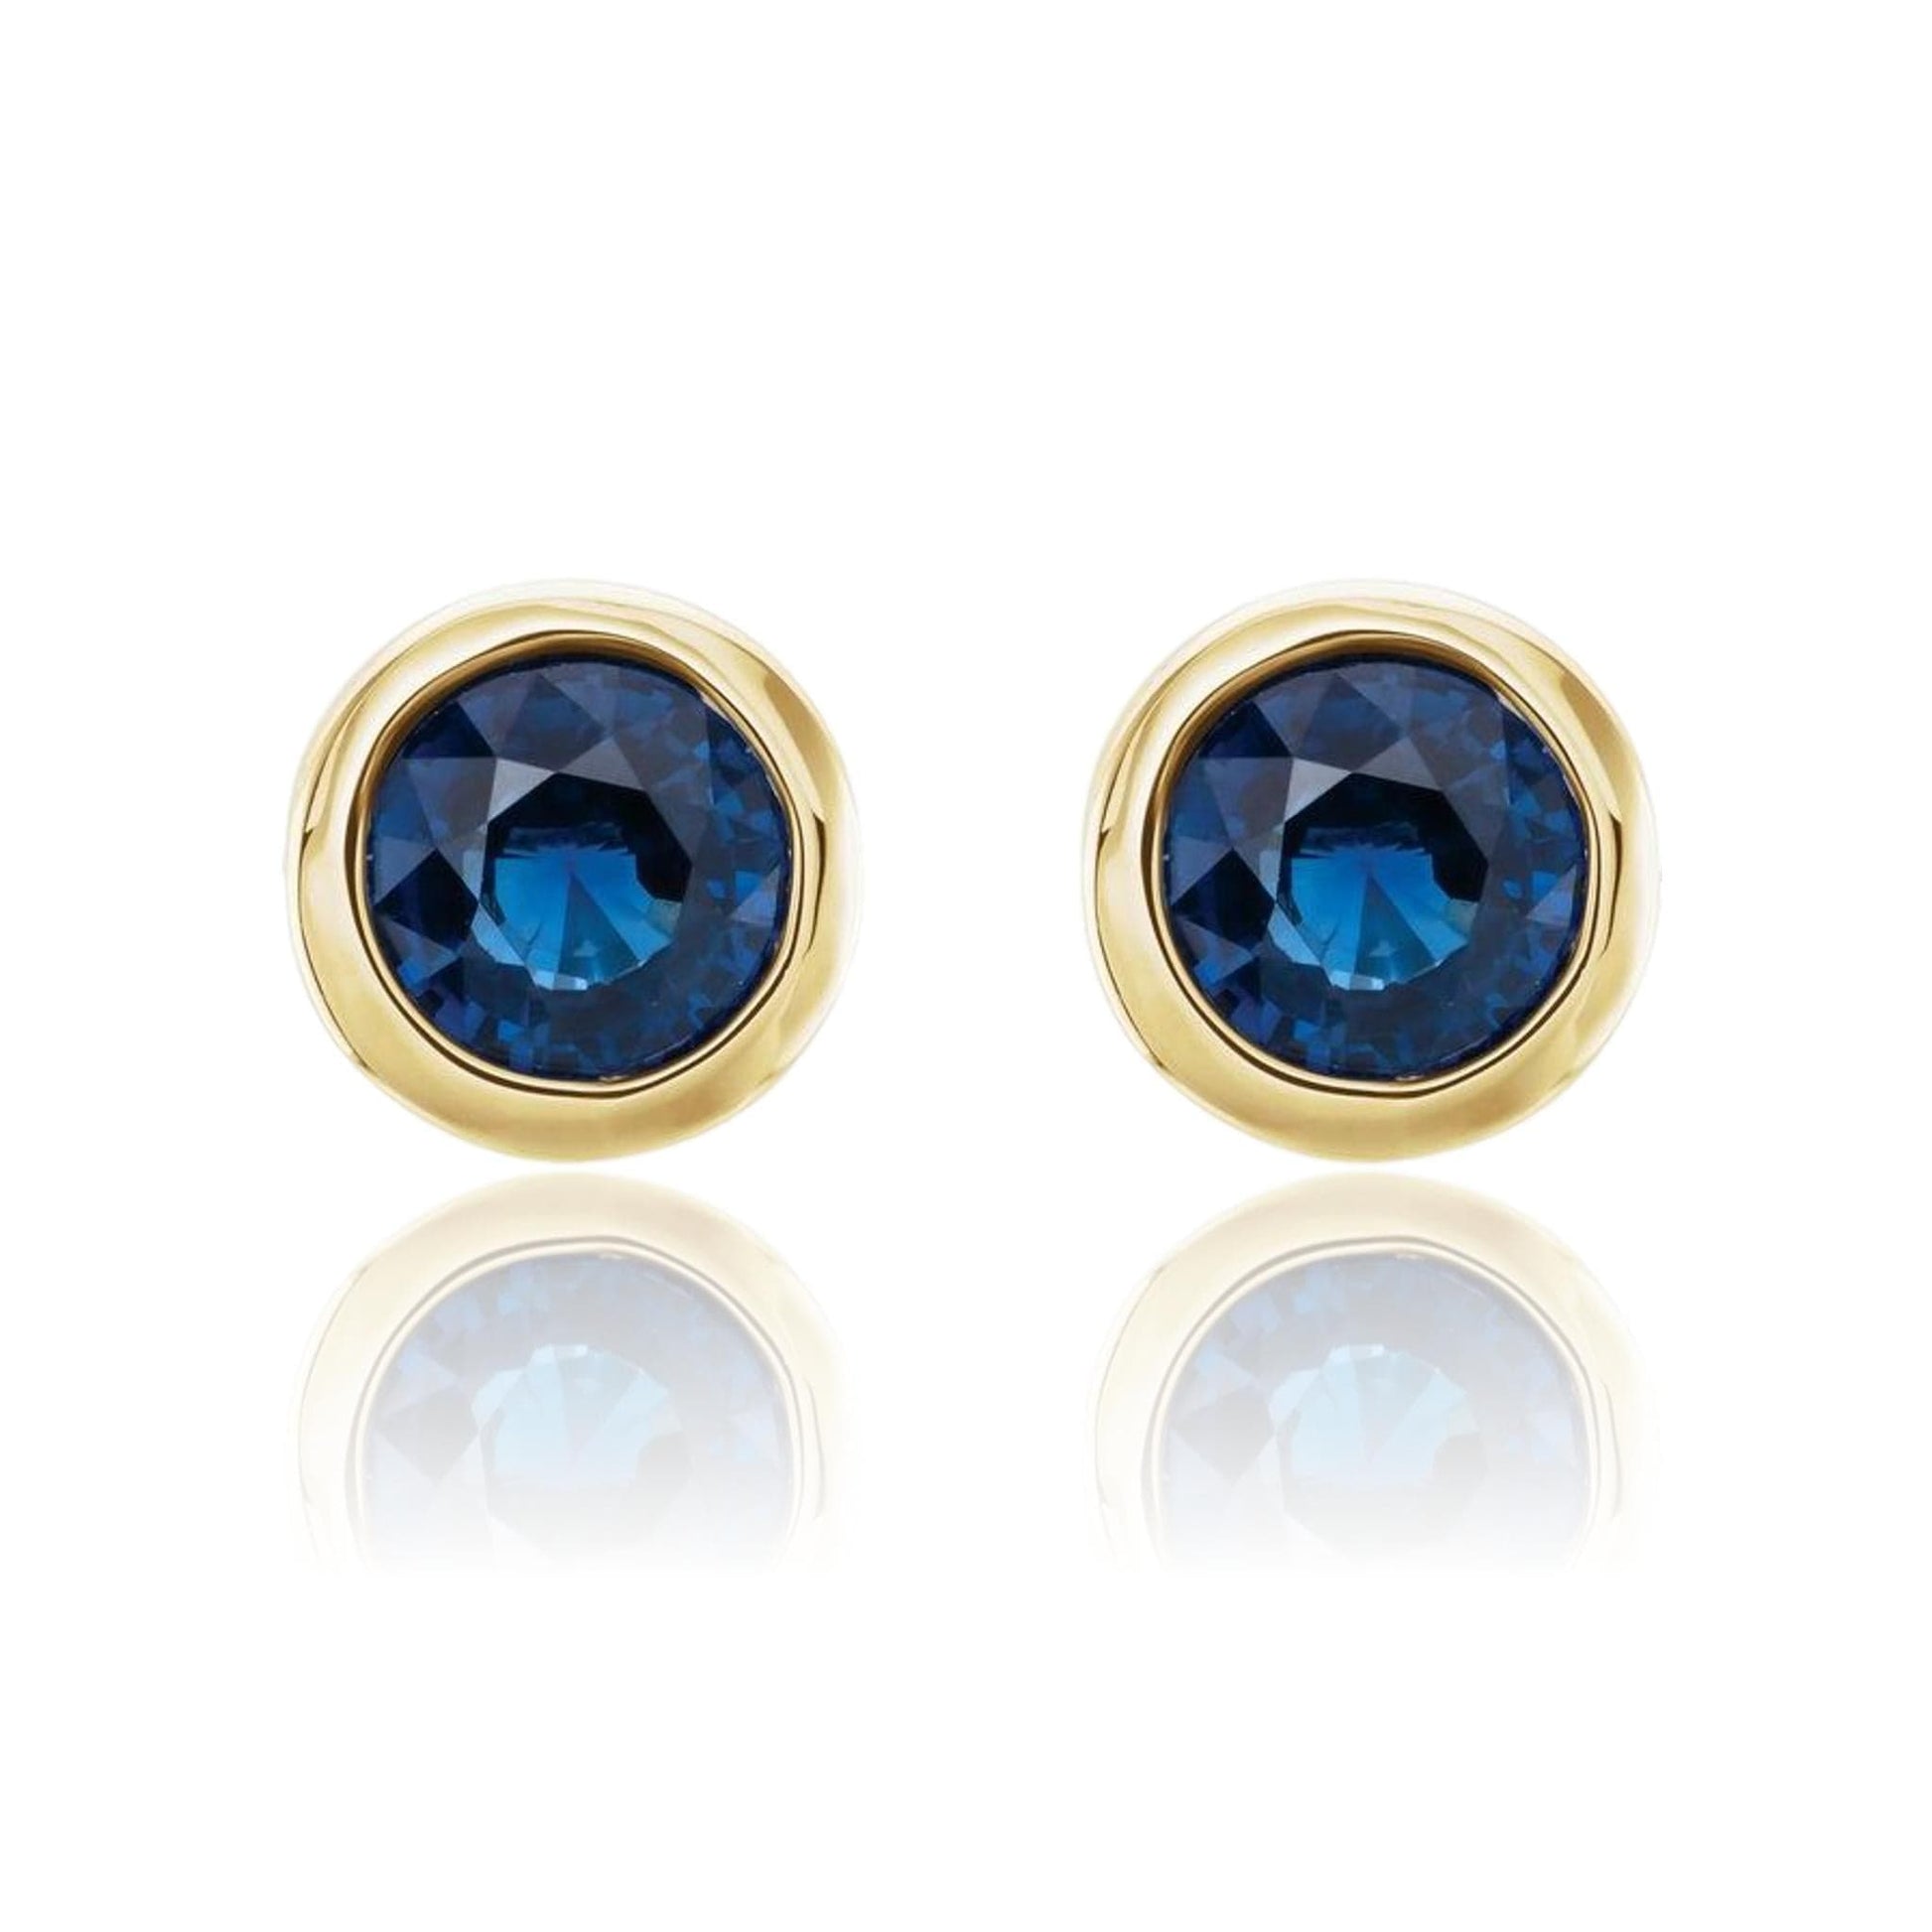 Simple Blue Sapphire Bezel Set Stud Earrings 14k Yellow Gold / 4mm Lab Created Sapphires Earrings by Nodeform